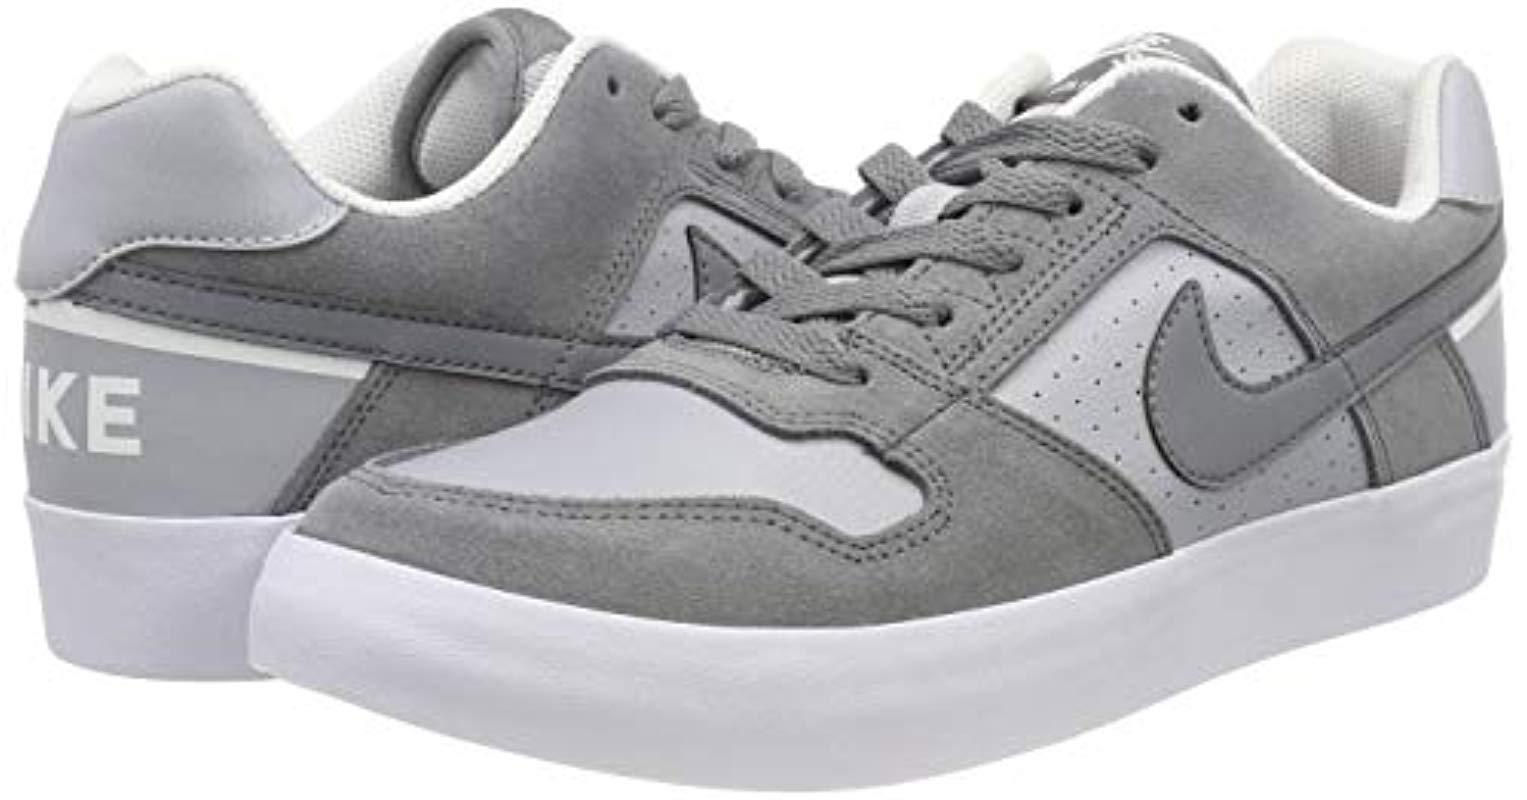 Nike Sb Delta Force Vulc in Grey (Grey) for Men - Lyst